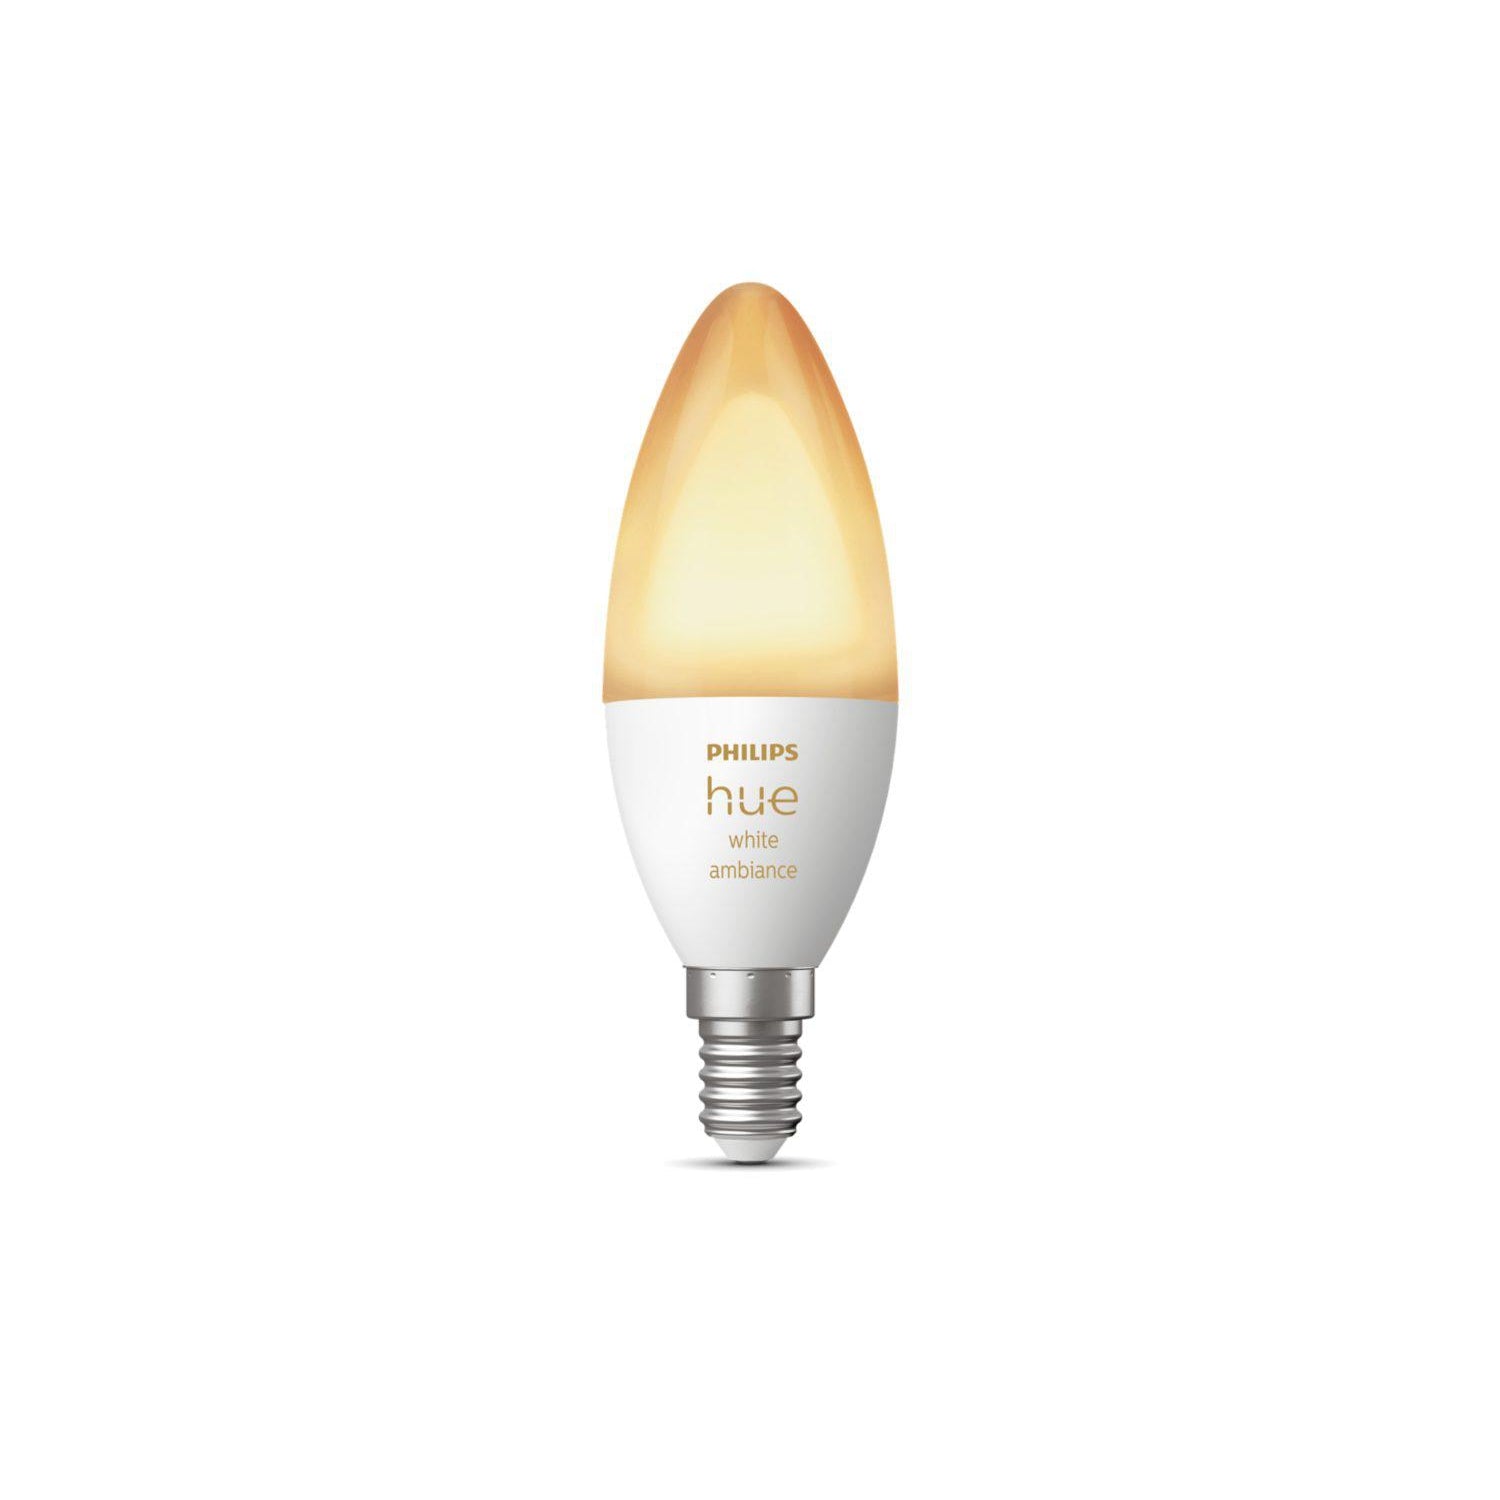 Philips Hue White Ambiance Single Smart LED Bulb - E14 Small Edison Screw